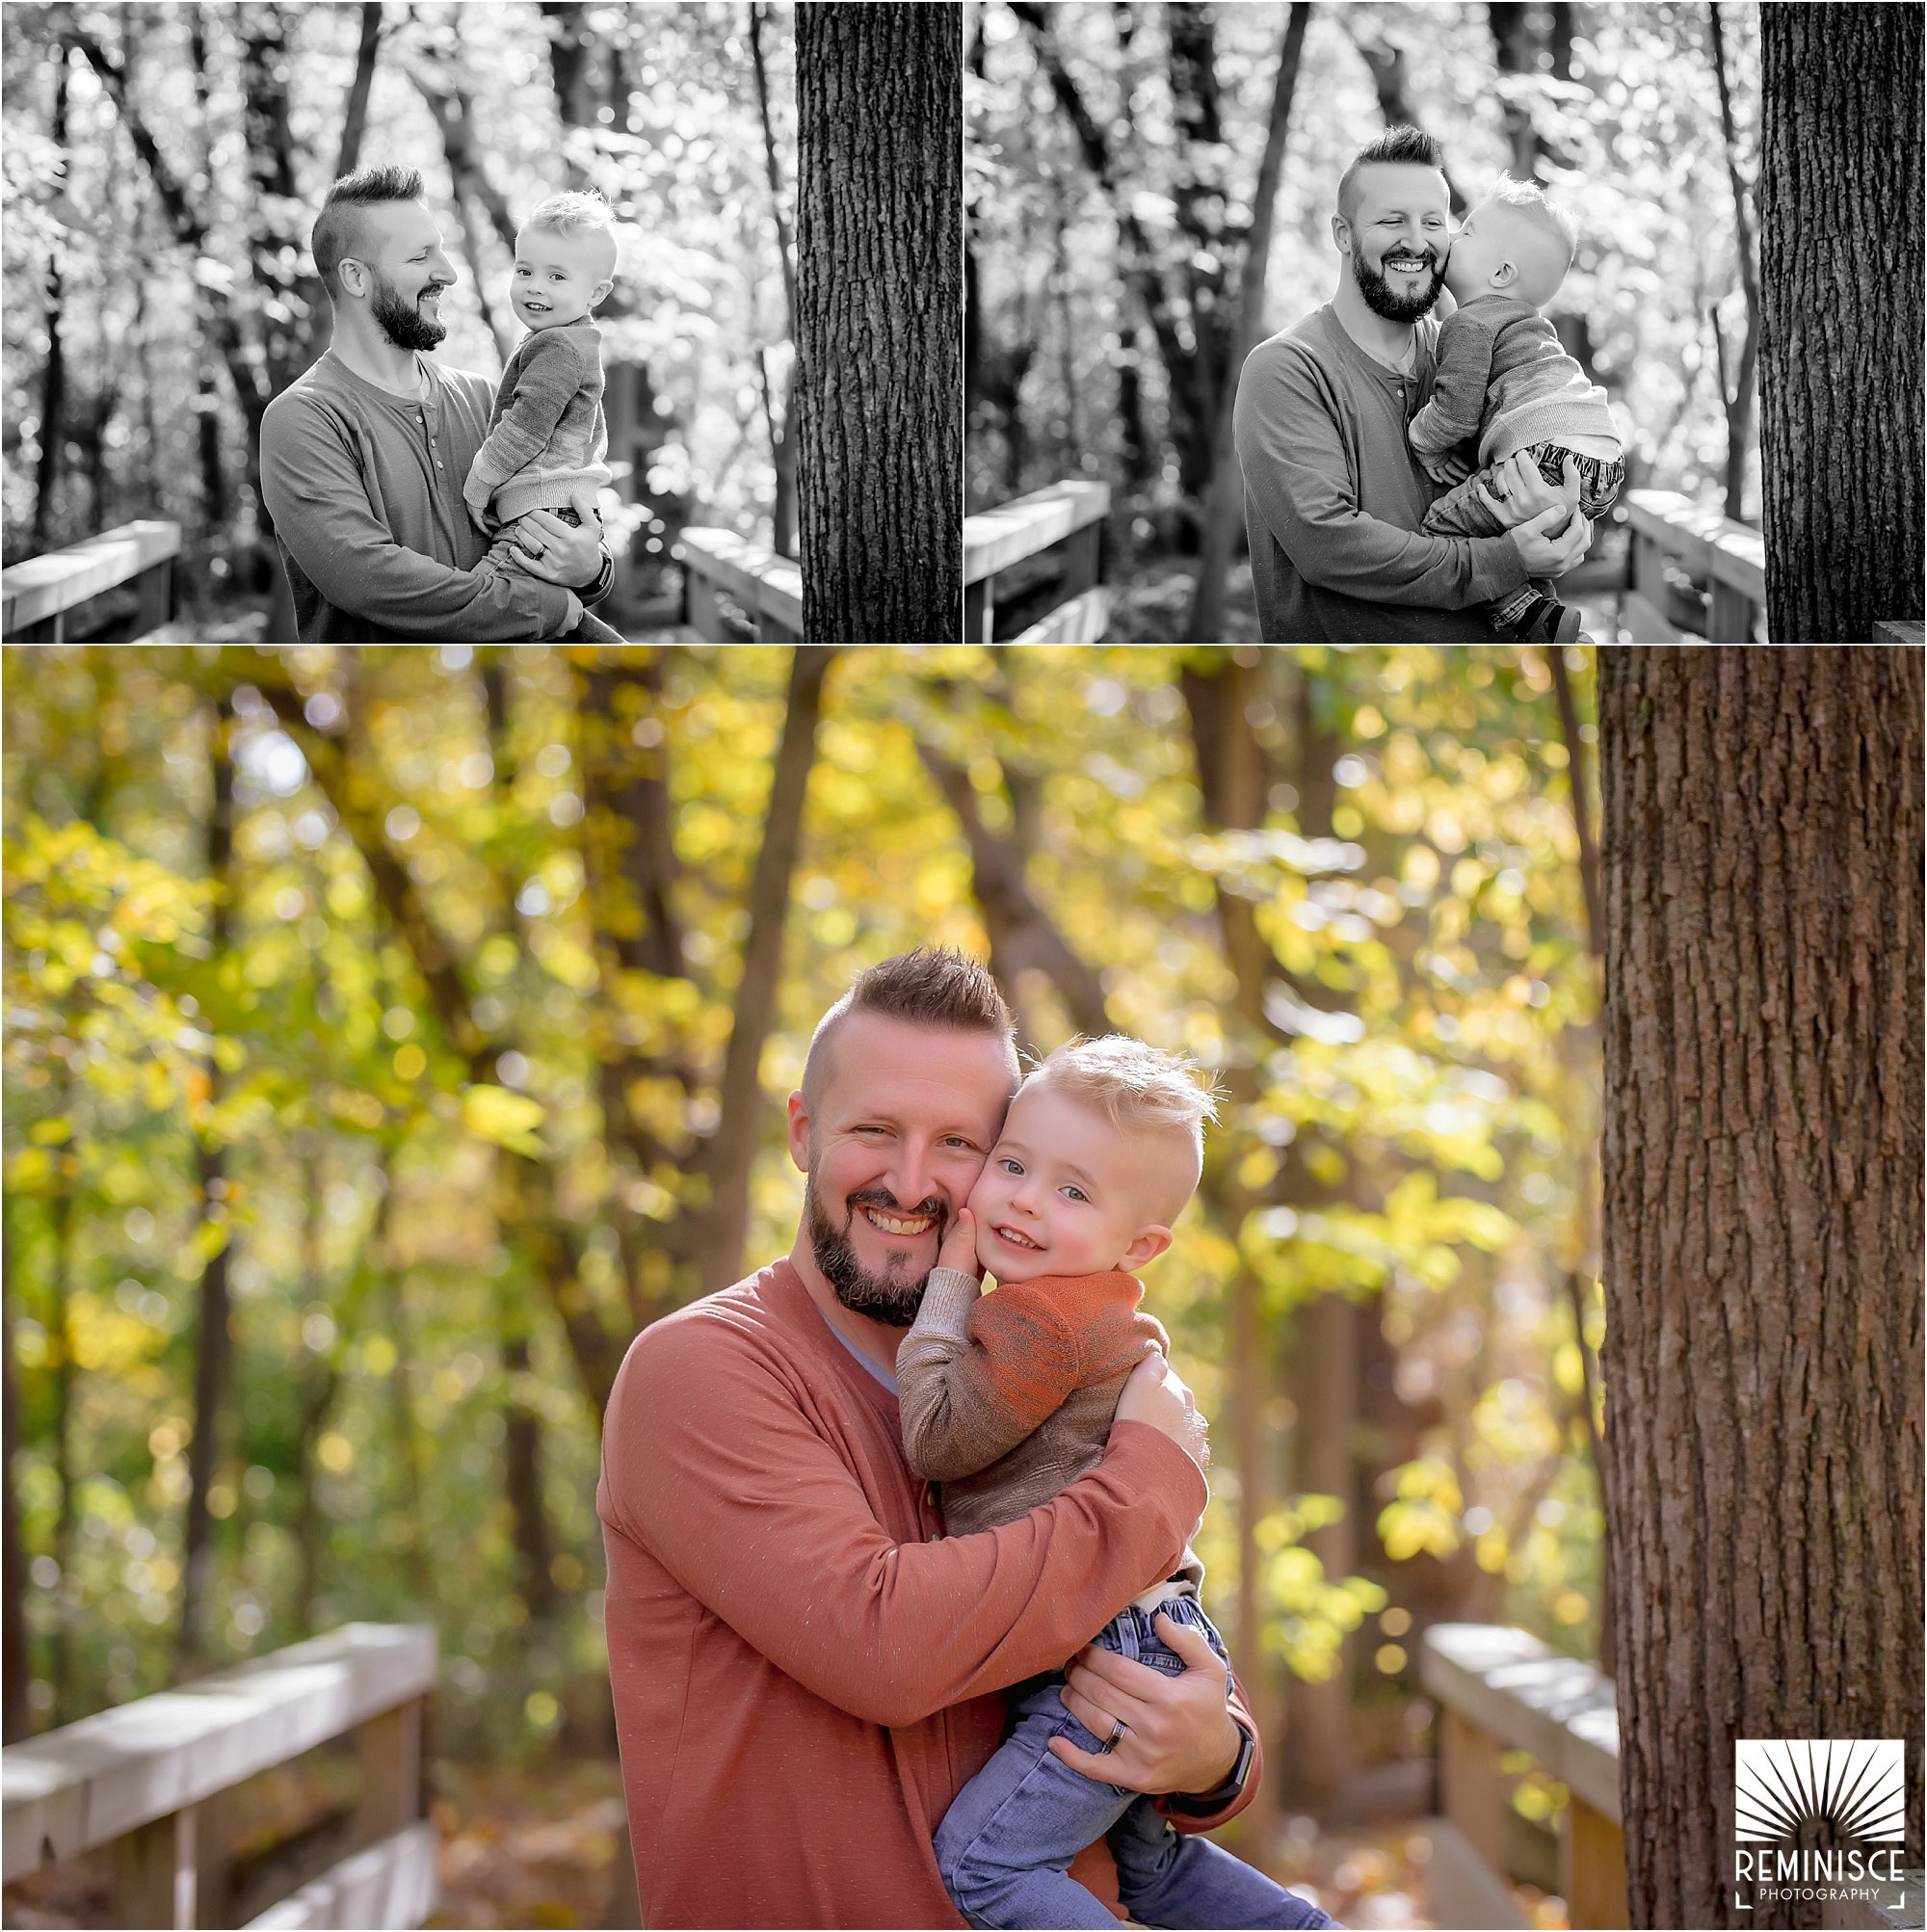 03-third-birthday-portraits-fall-photos-schlitz-audubon-nature-center-father-son-snuggling.jpg